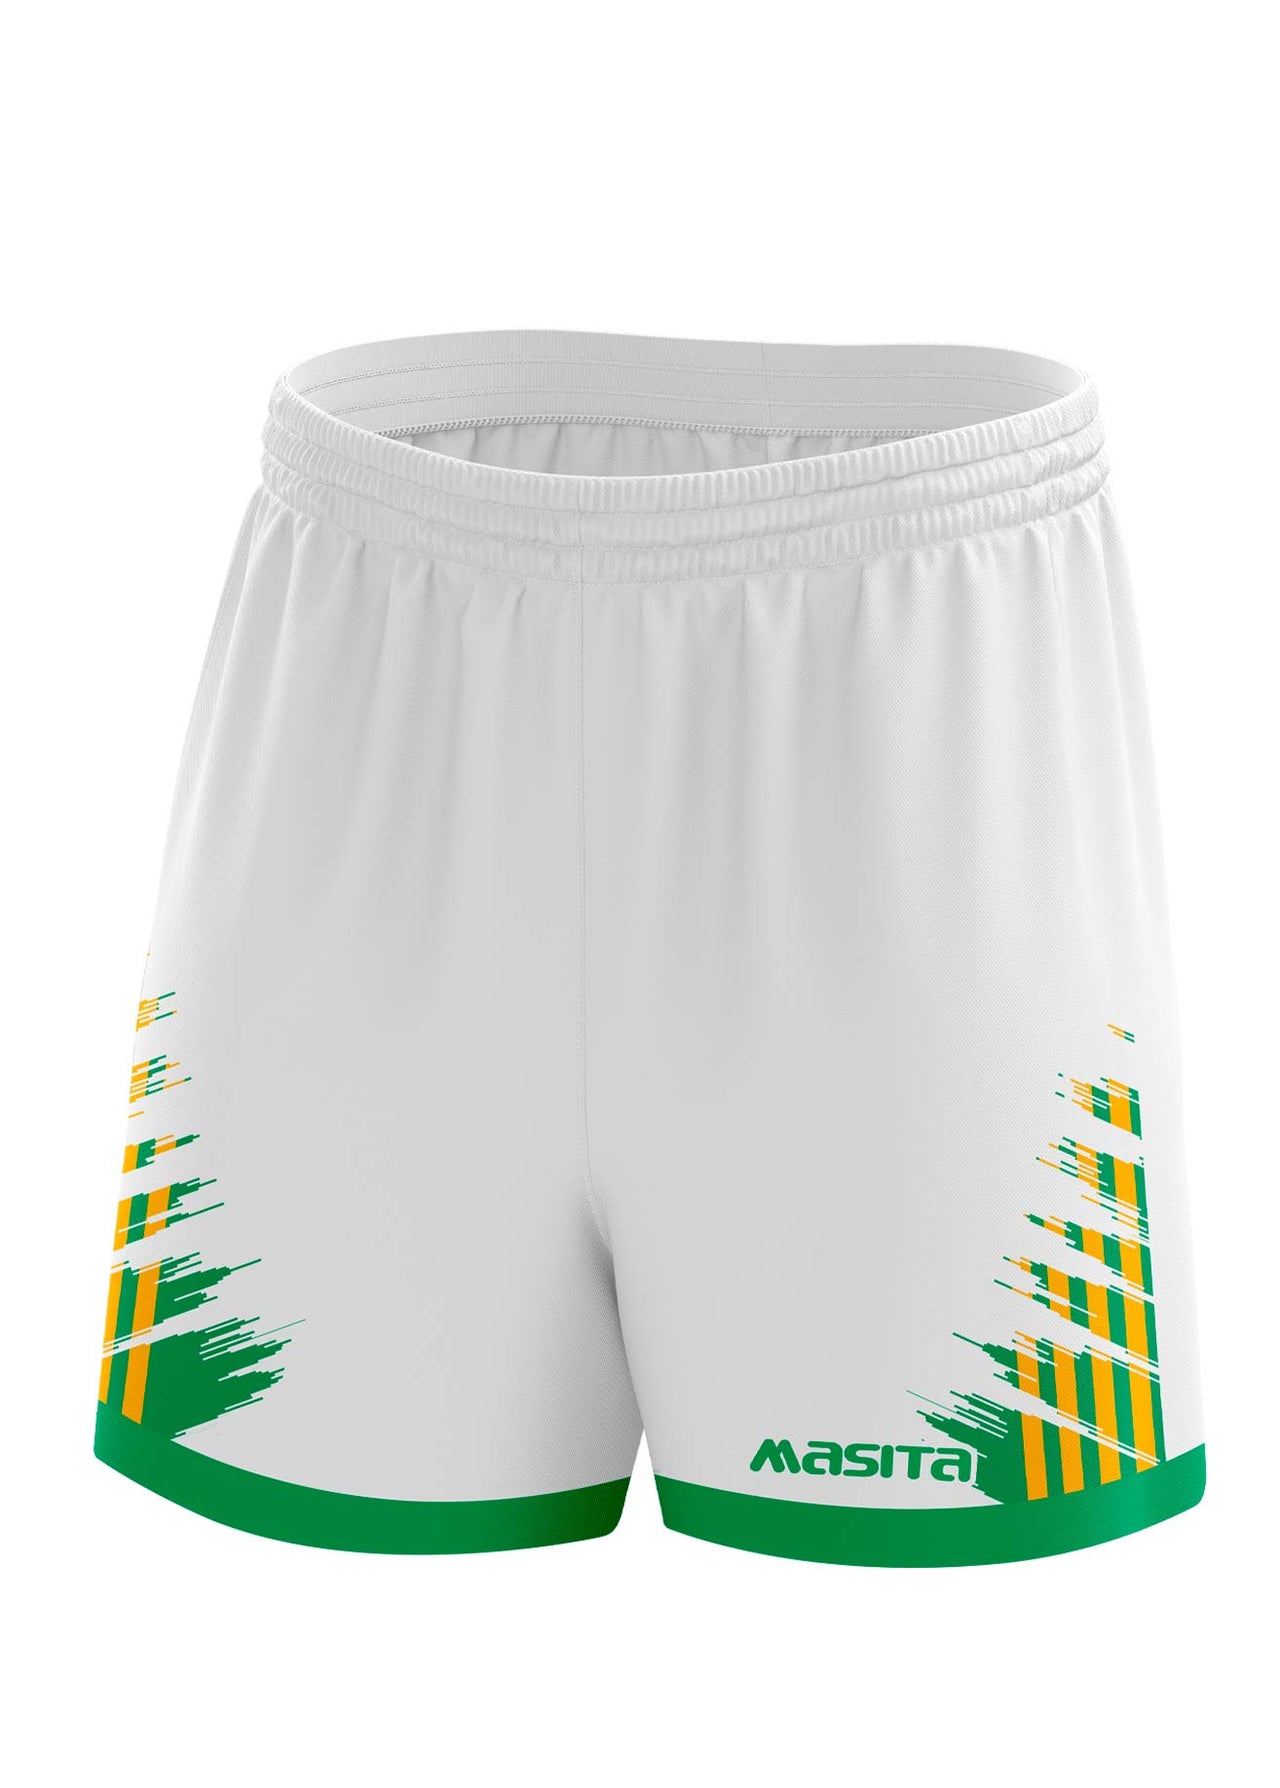 Barkley Gaelic Shorts White/Green/Amber Adult